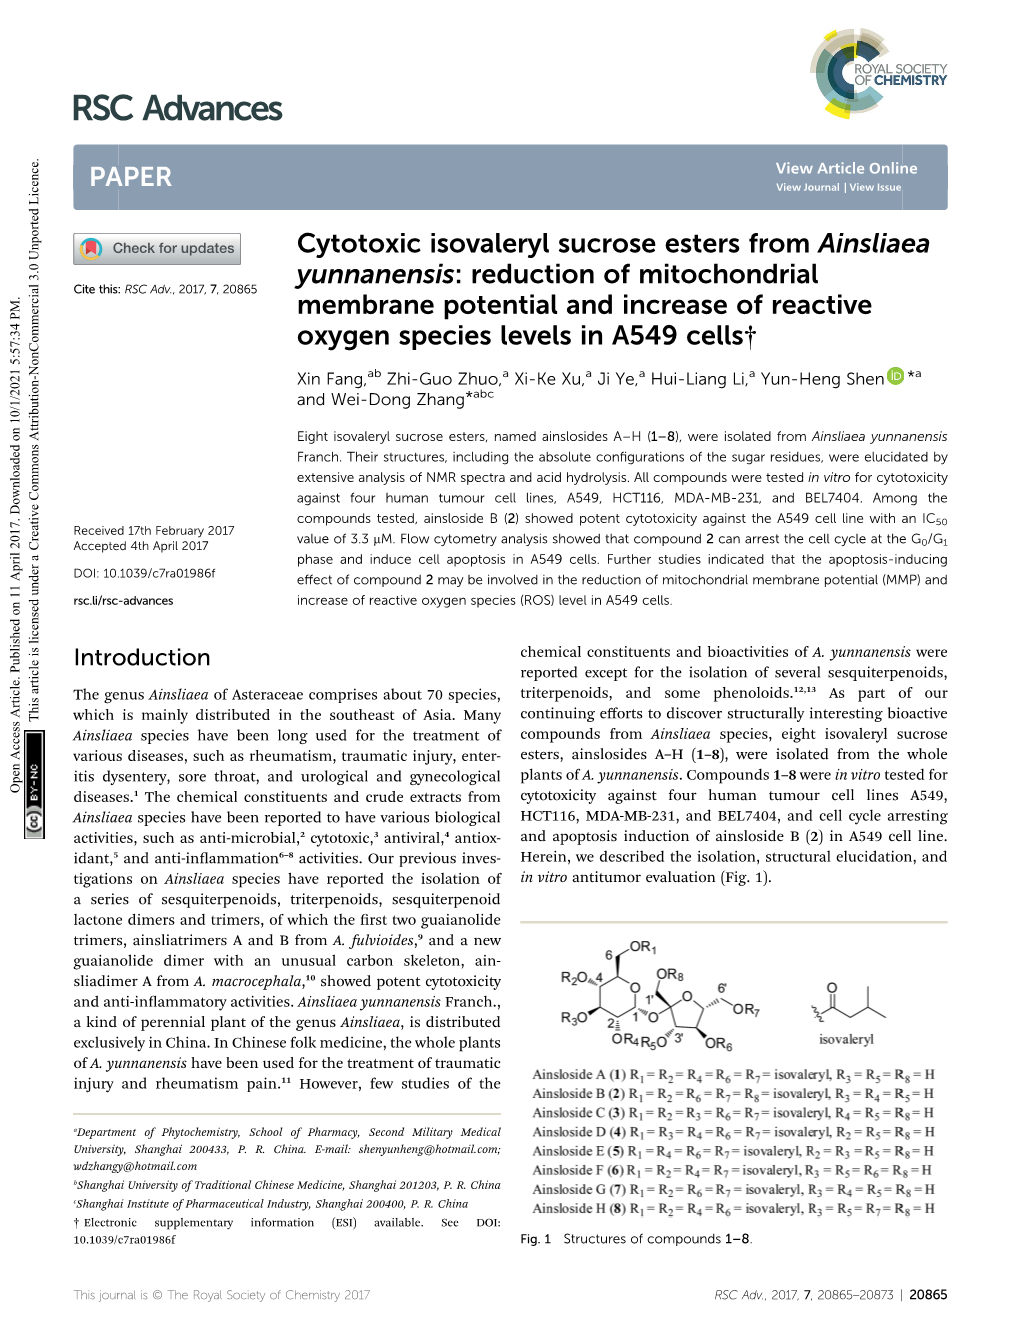 Cytotoxic Isovaleryl Sucrose Esters from Ainsliaea